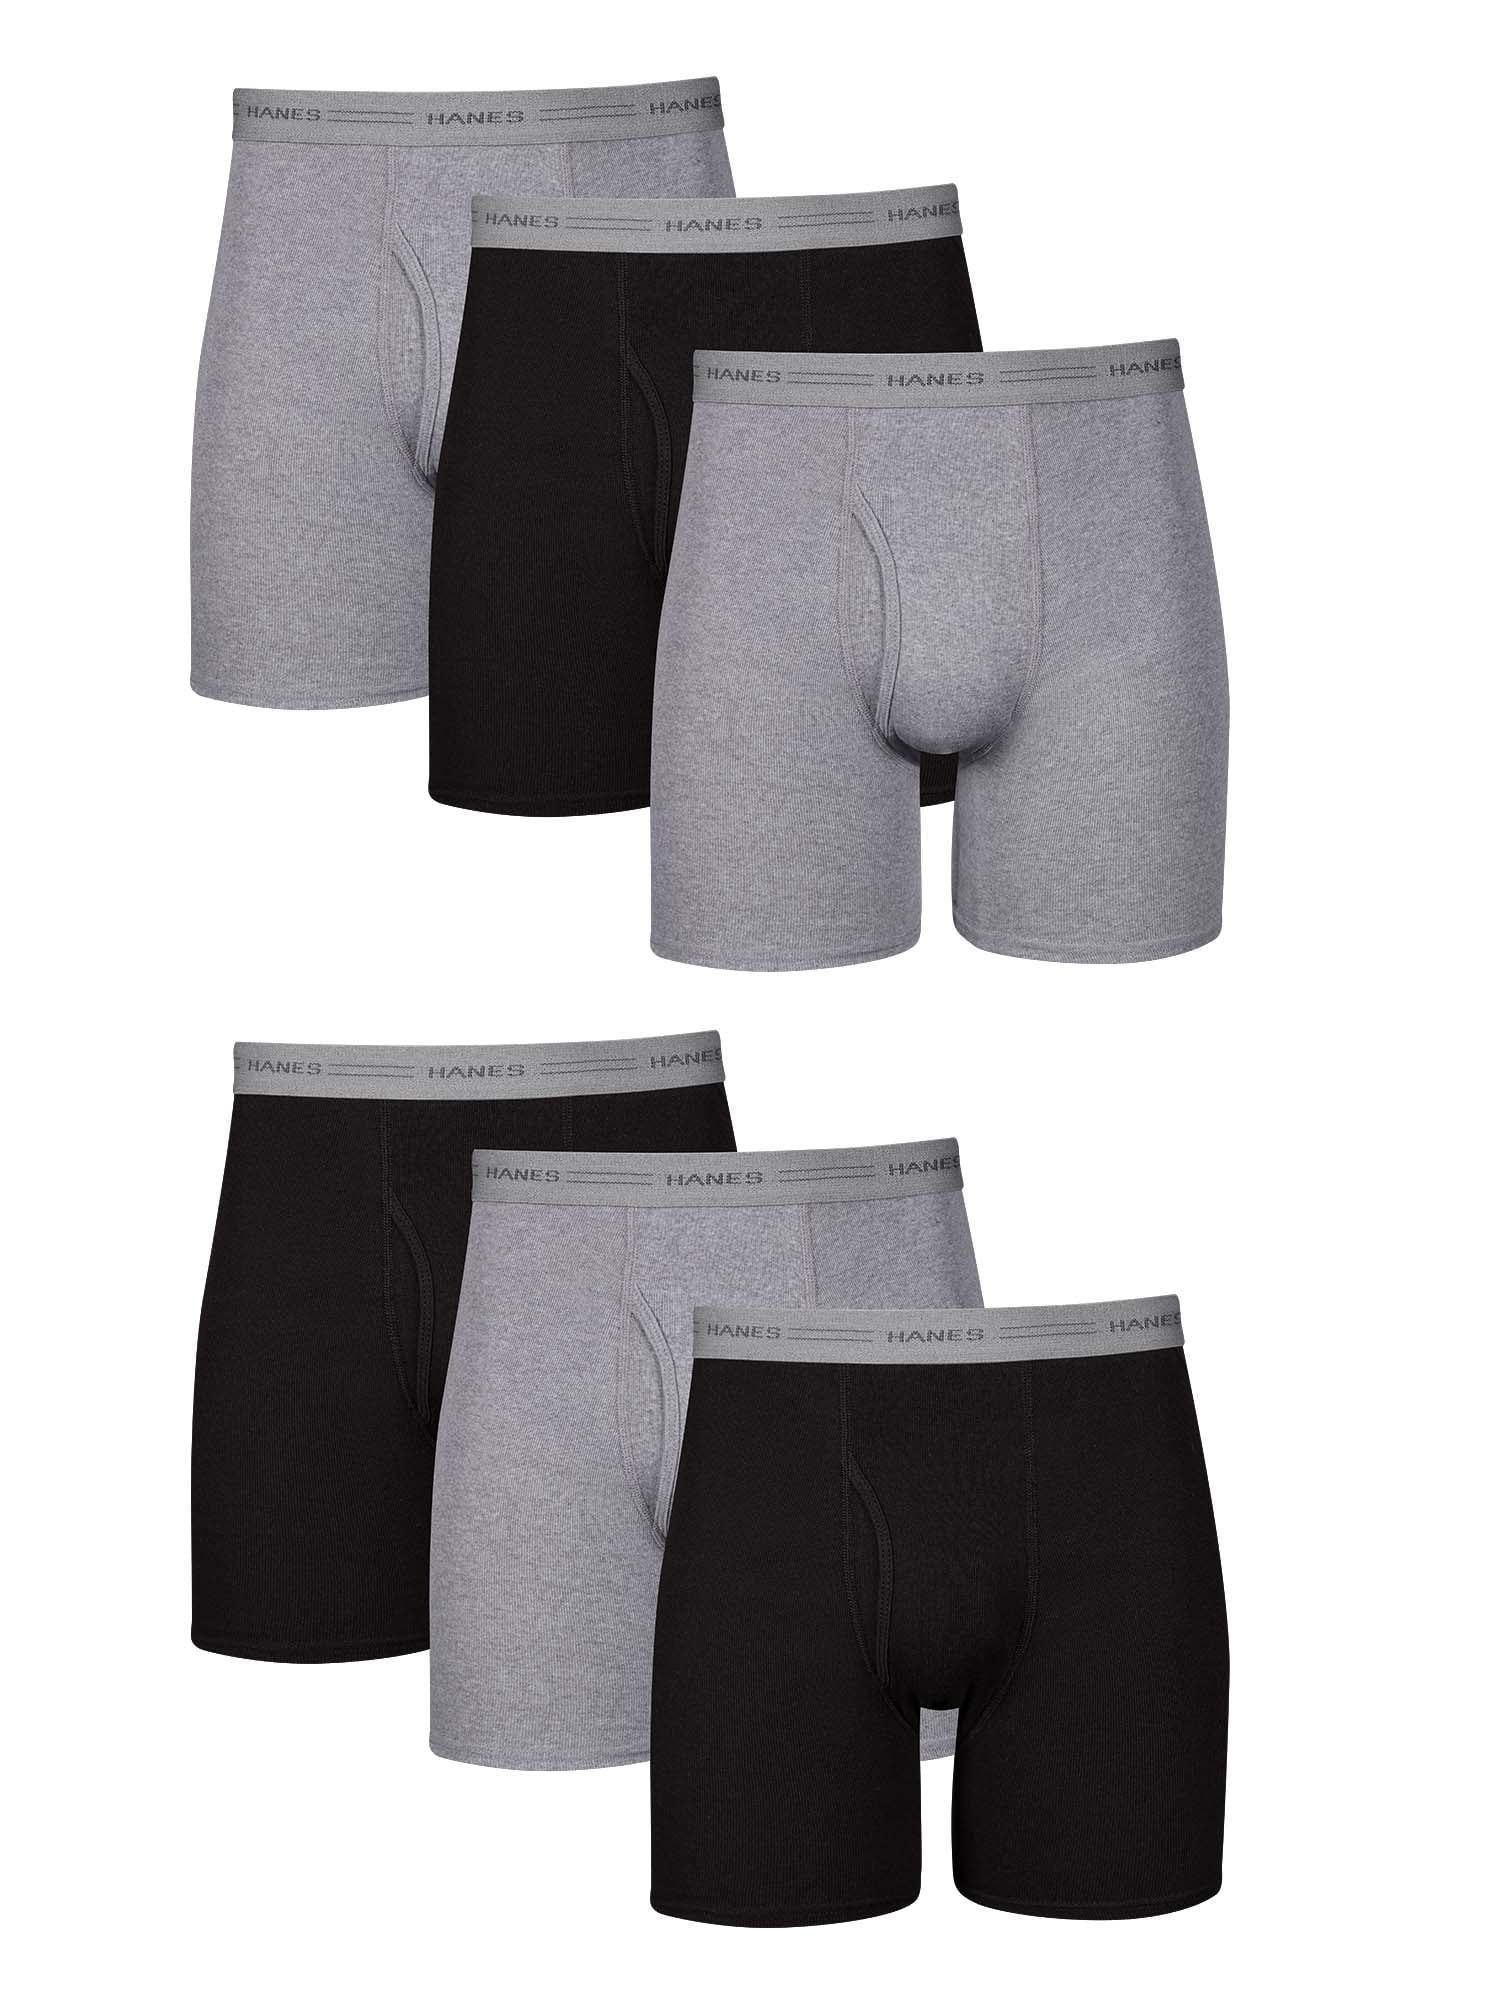 4 Pack Hanes Men's Briefs Underwear Big & Tall Man Size 2XL 3XL 4XL Black Gray 